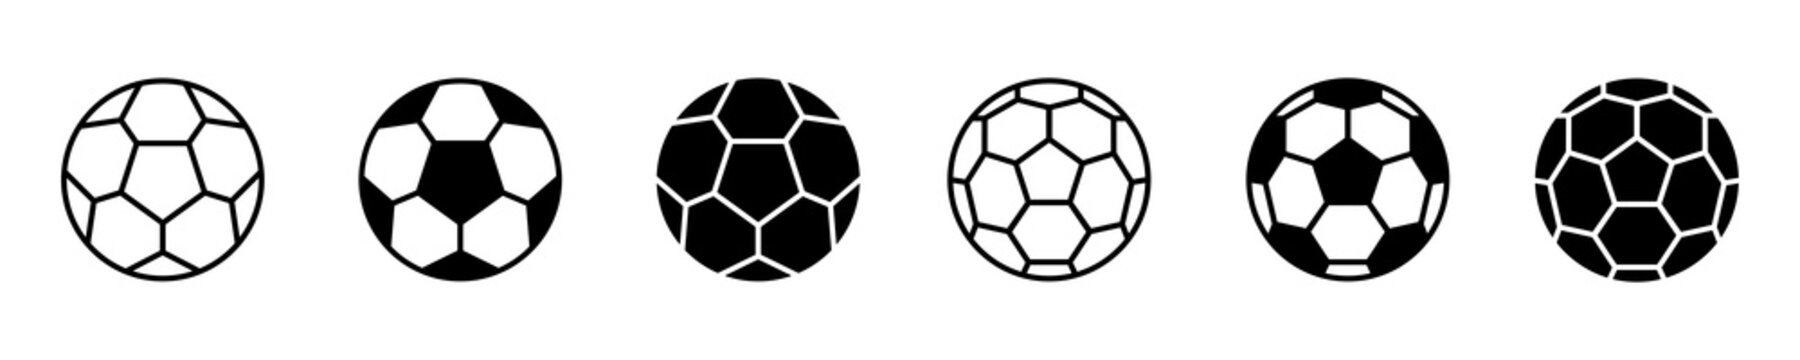 Soccer ball icon. Ball Icon. Football Icon black style, Vector illustration.